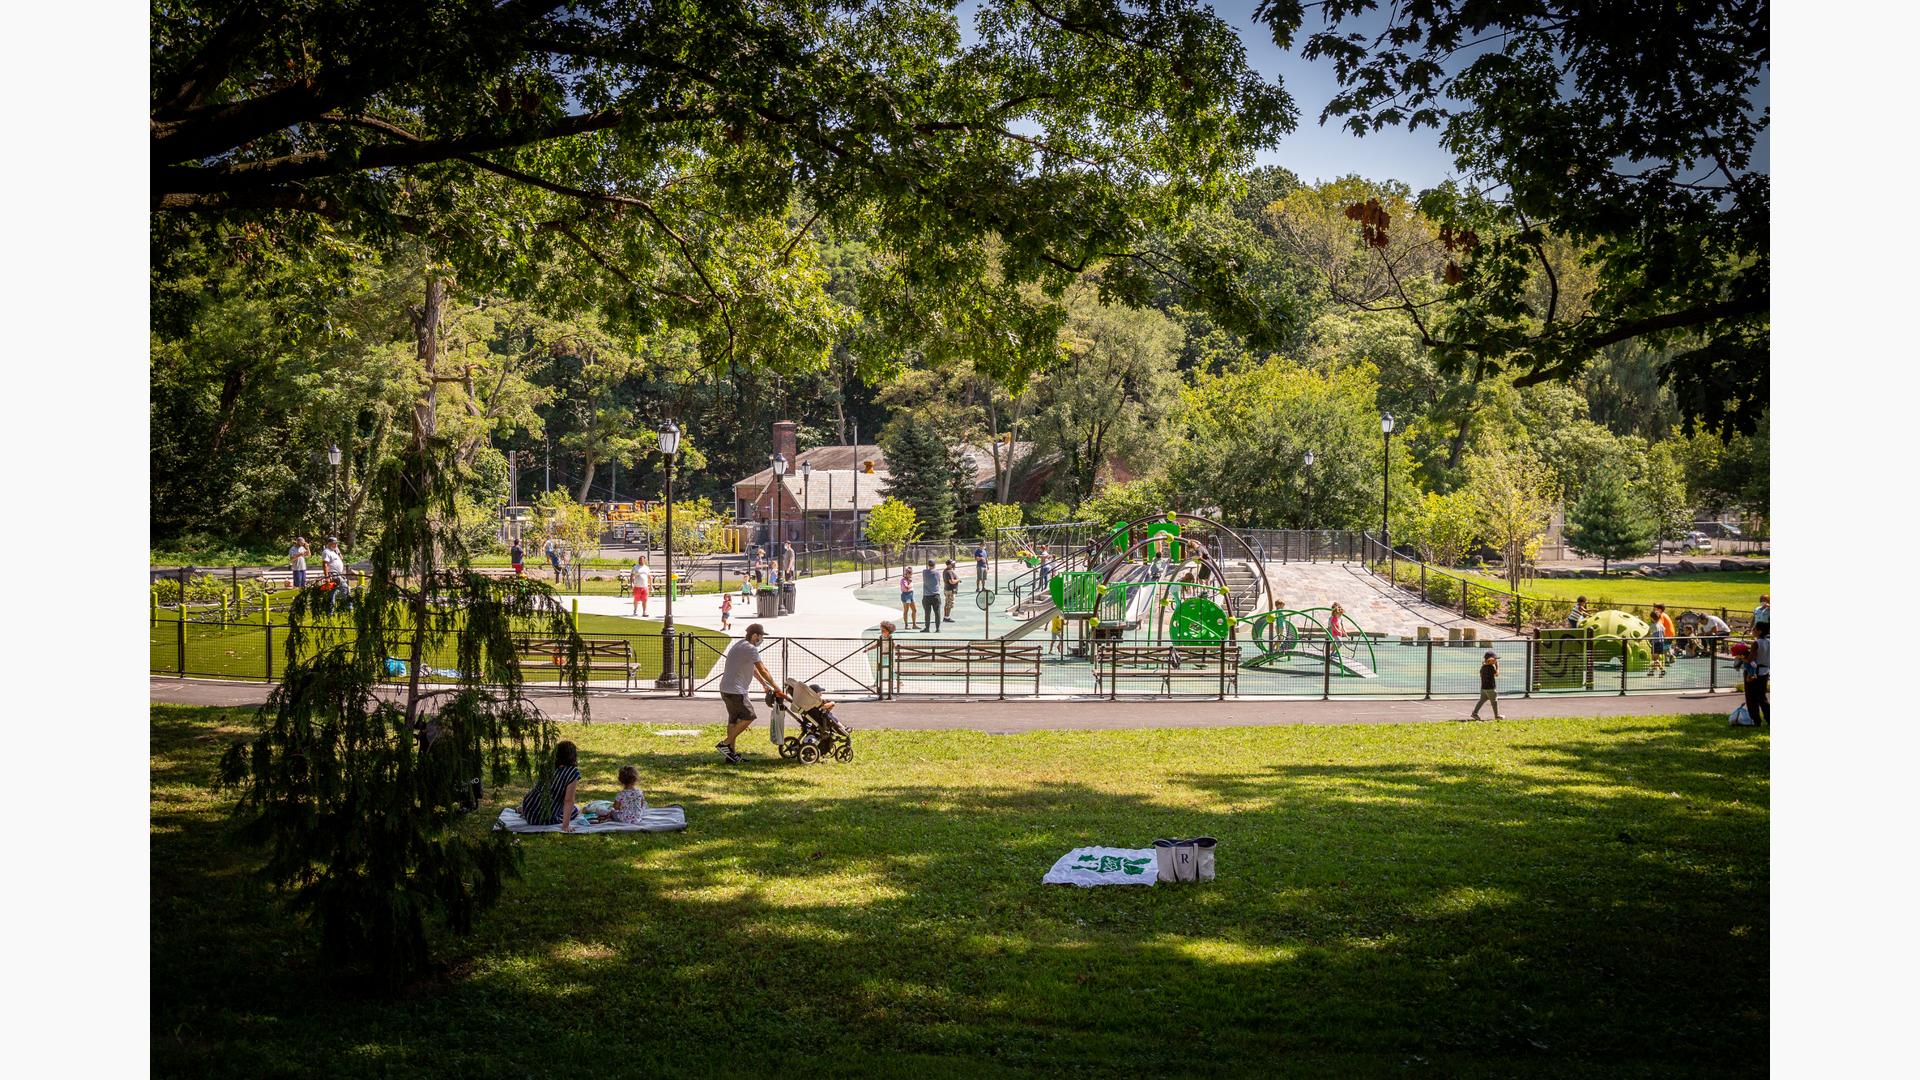 Van Cortlandt Park in Riverdale, NYC Playgrounds